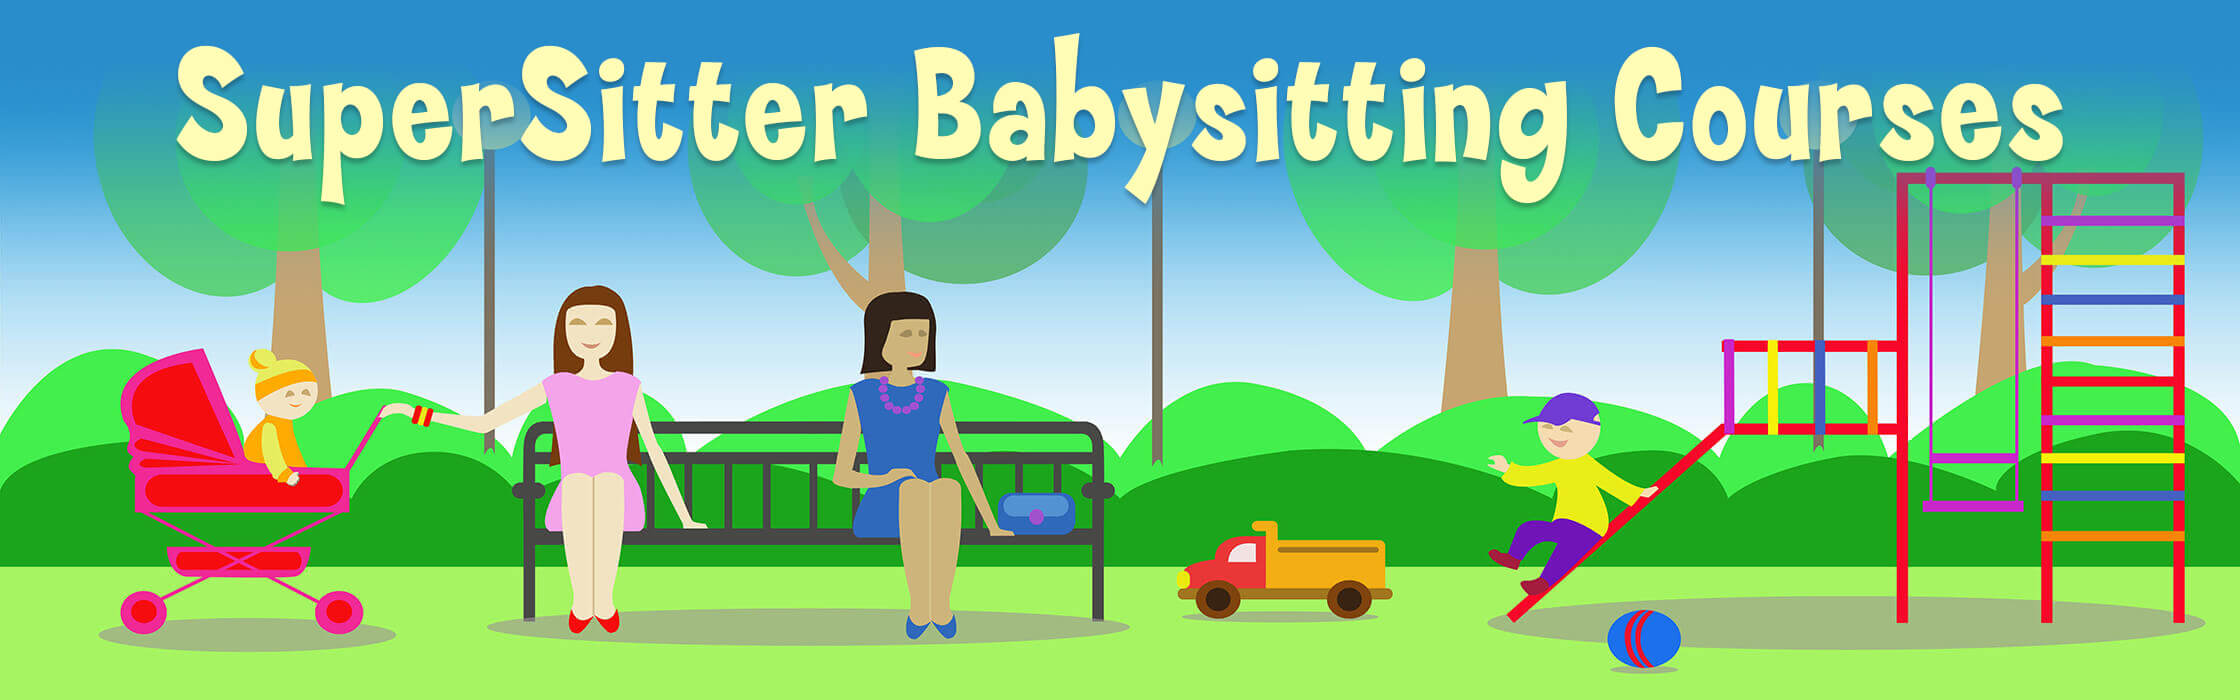 Supersitter Babysitting Courses